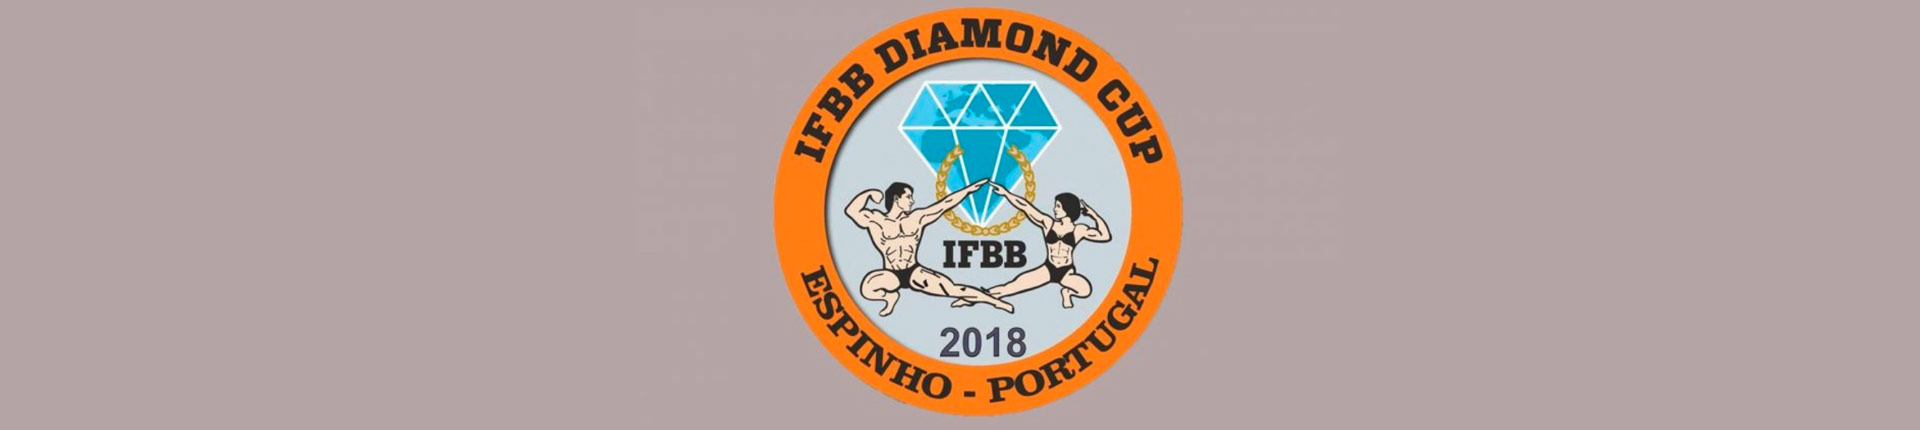 Diamond Cup Espinho 2018